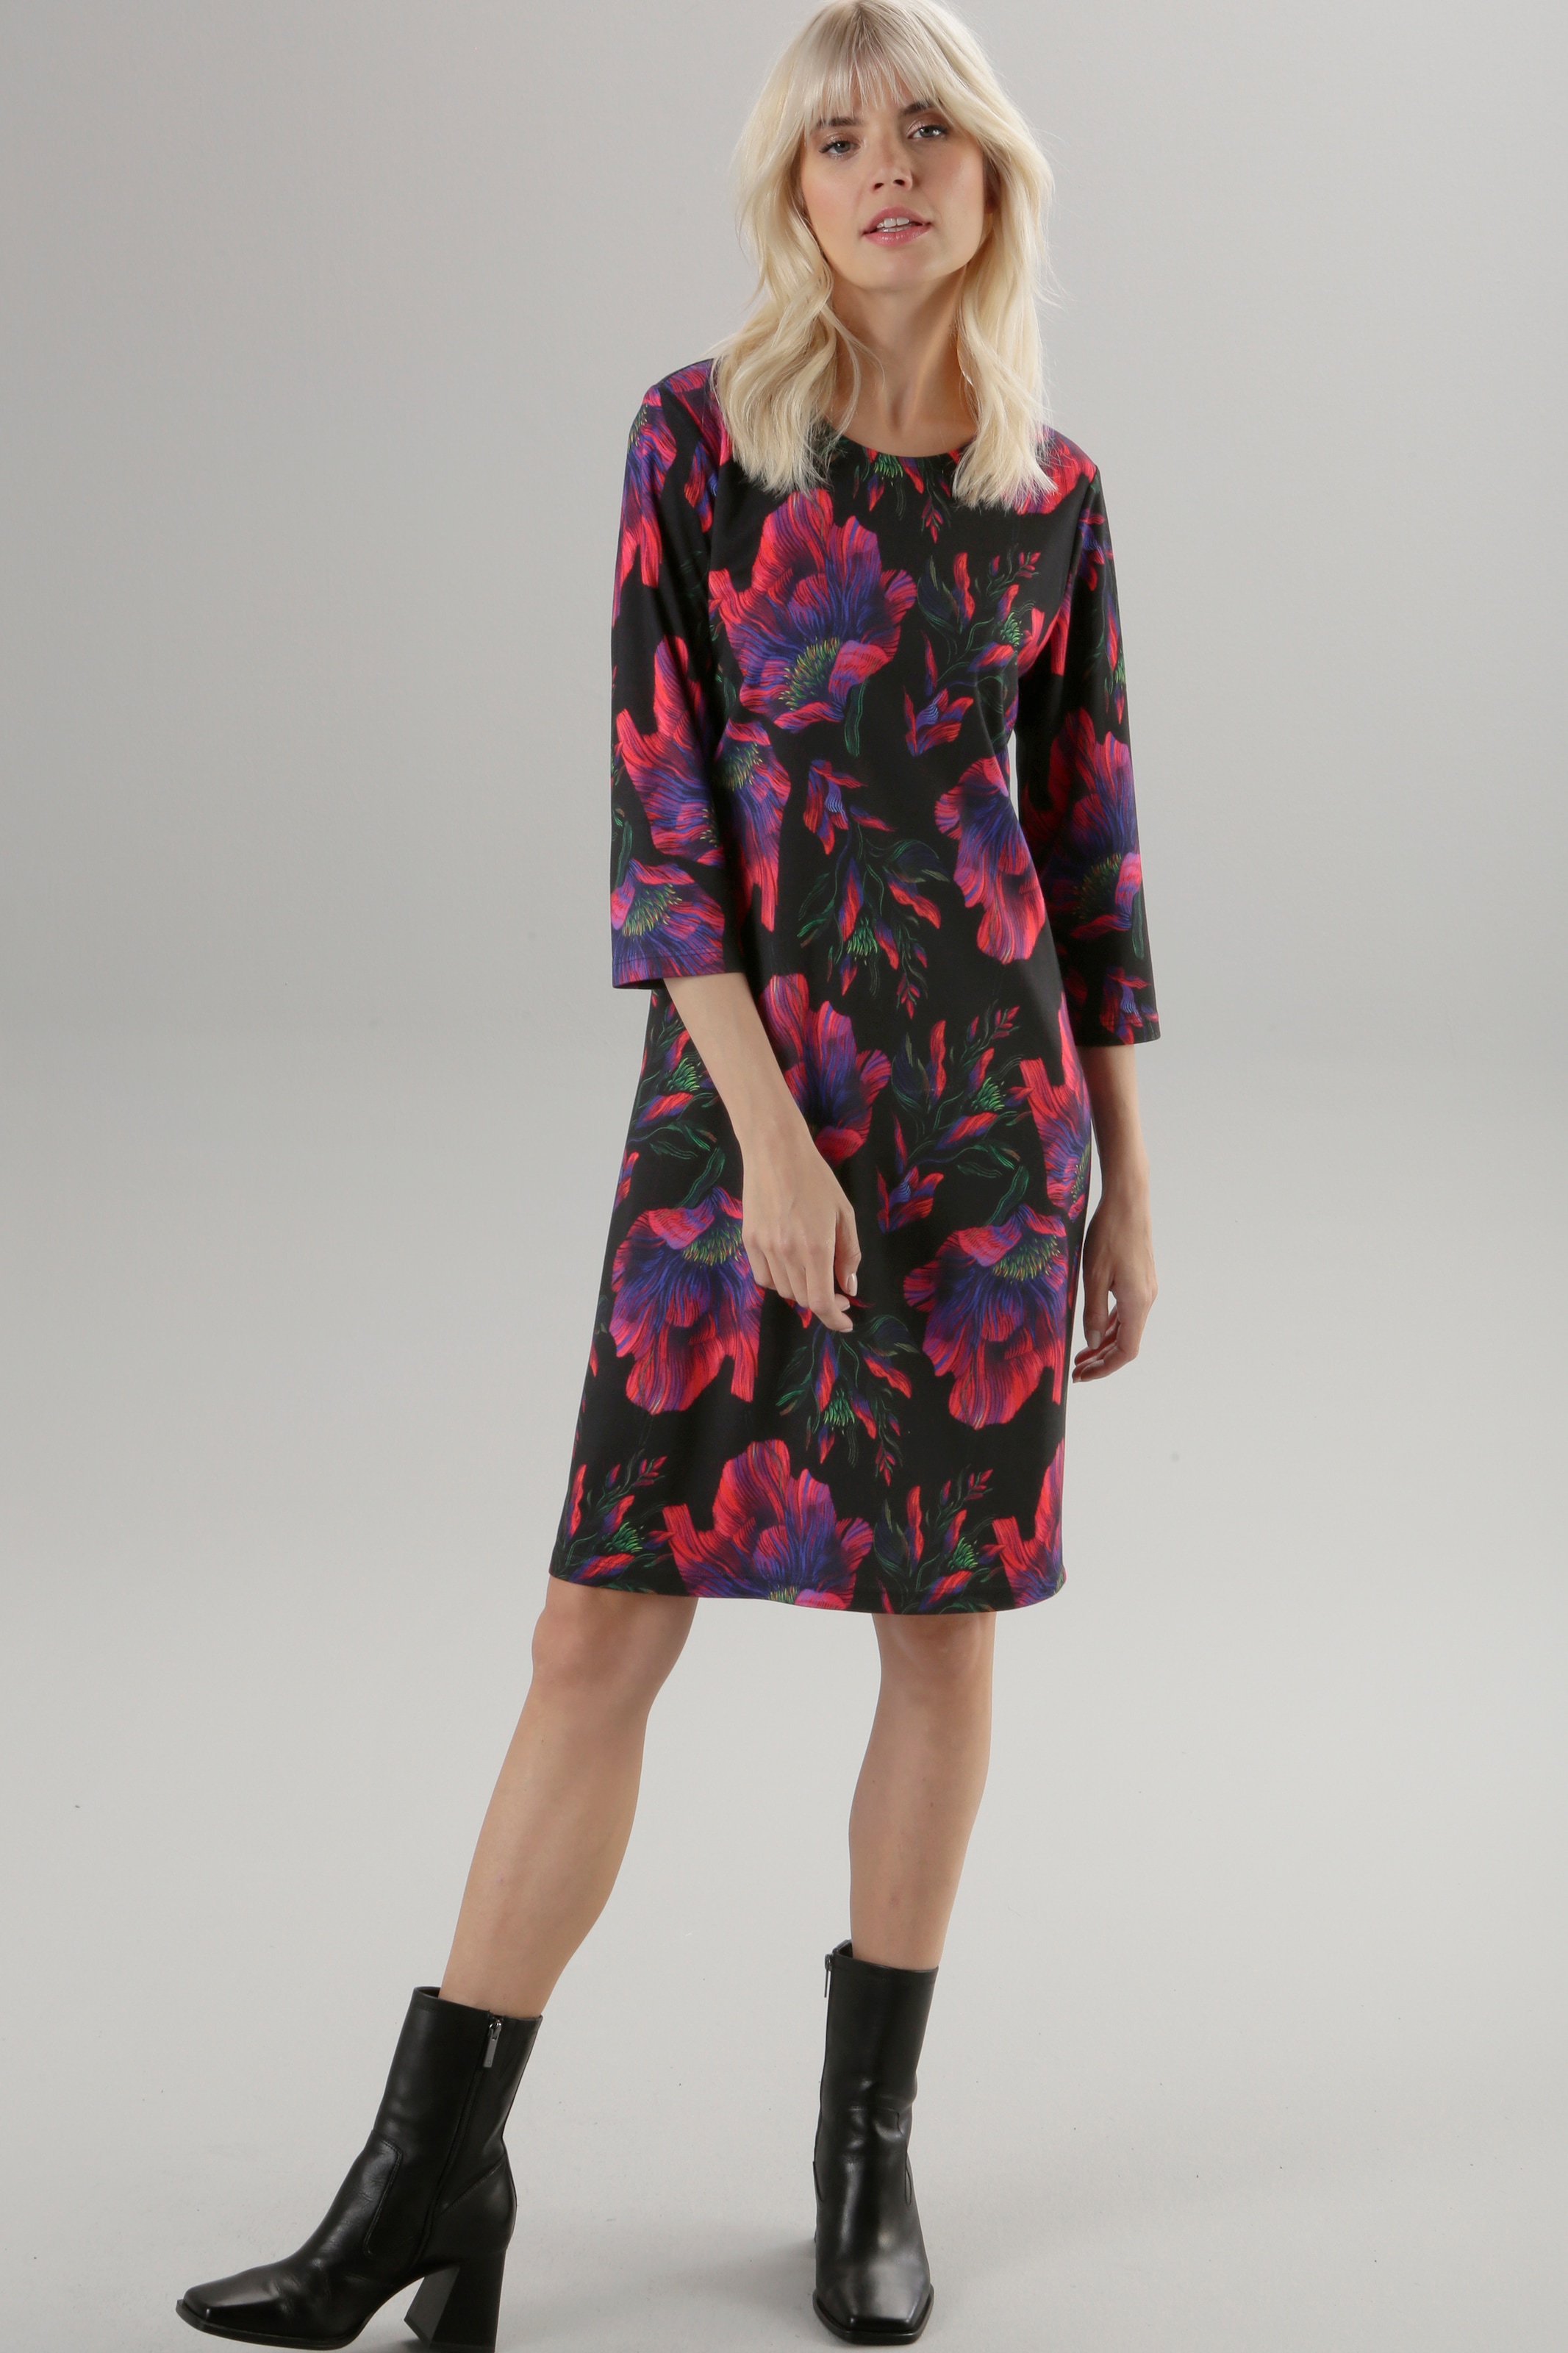 Aniston SELECTED Jerseykleid, Knallfarben in Blumendruck mit kaufen